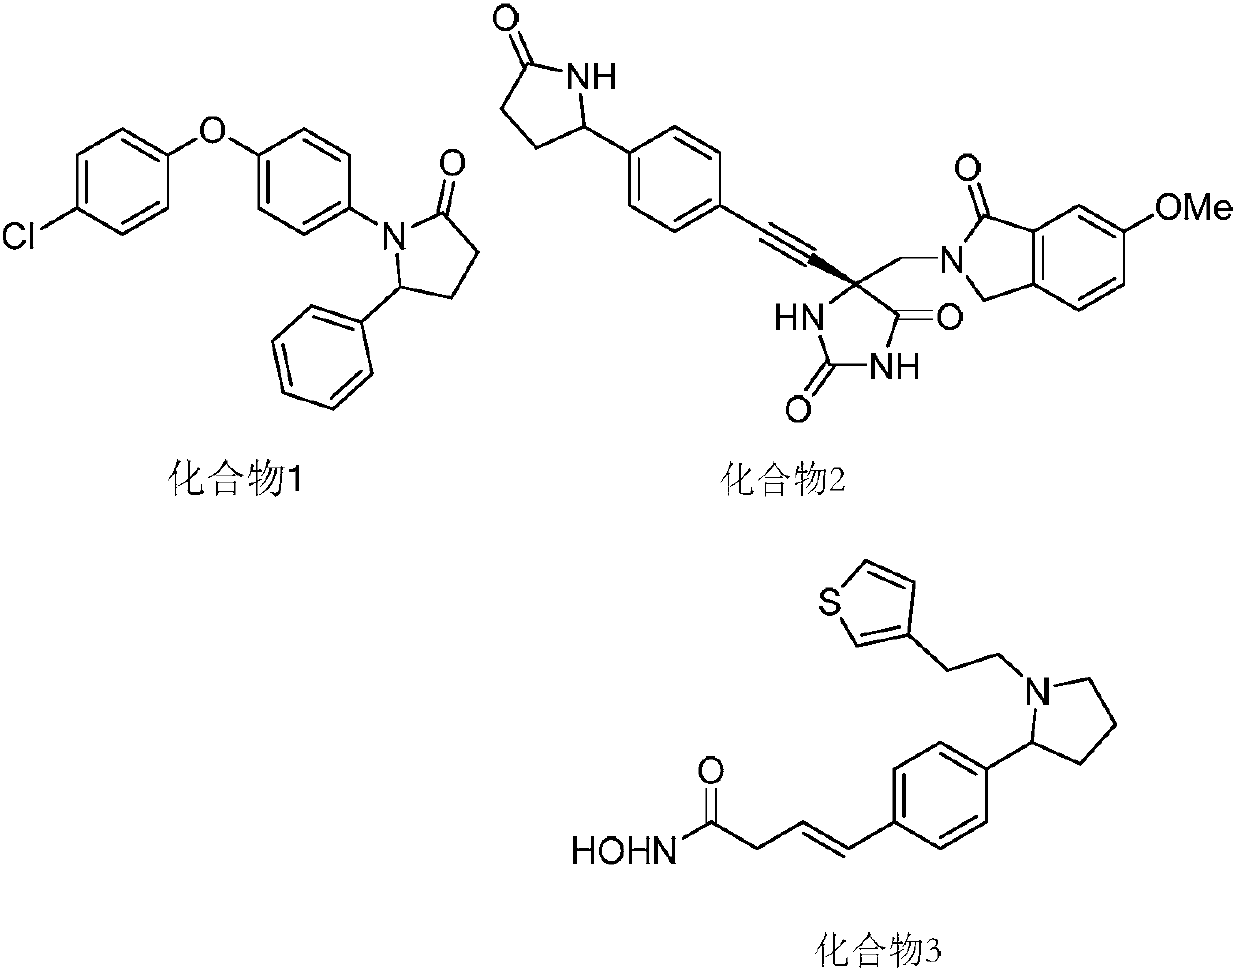 Method for preparing 4-aminobutyrate derivatives